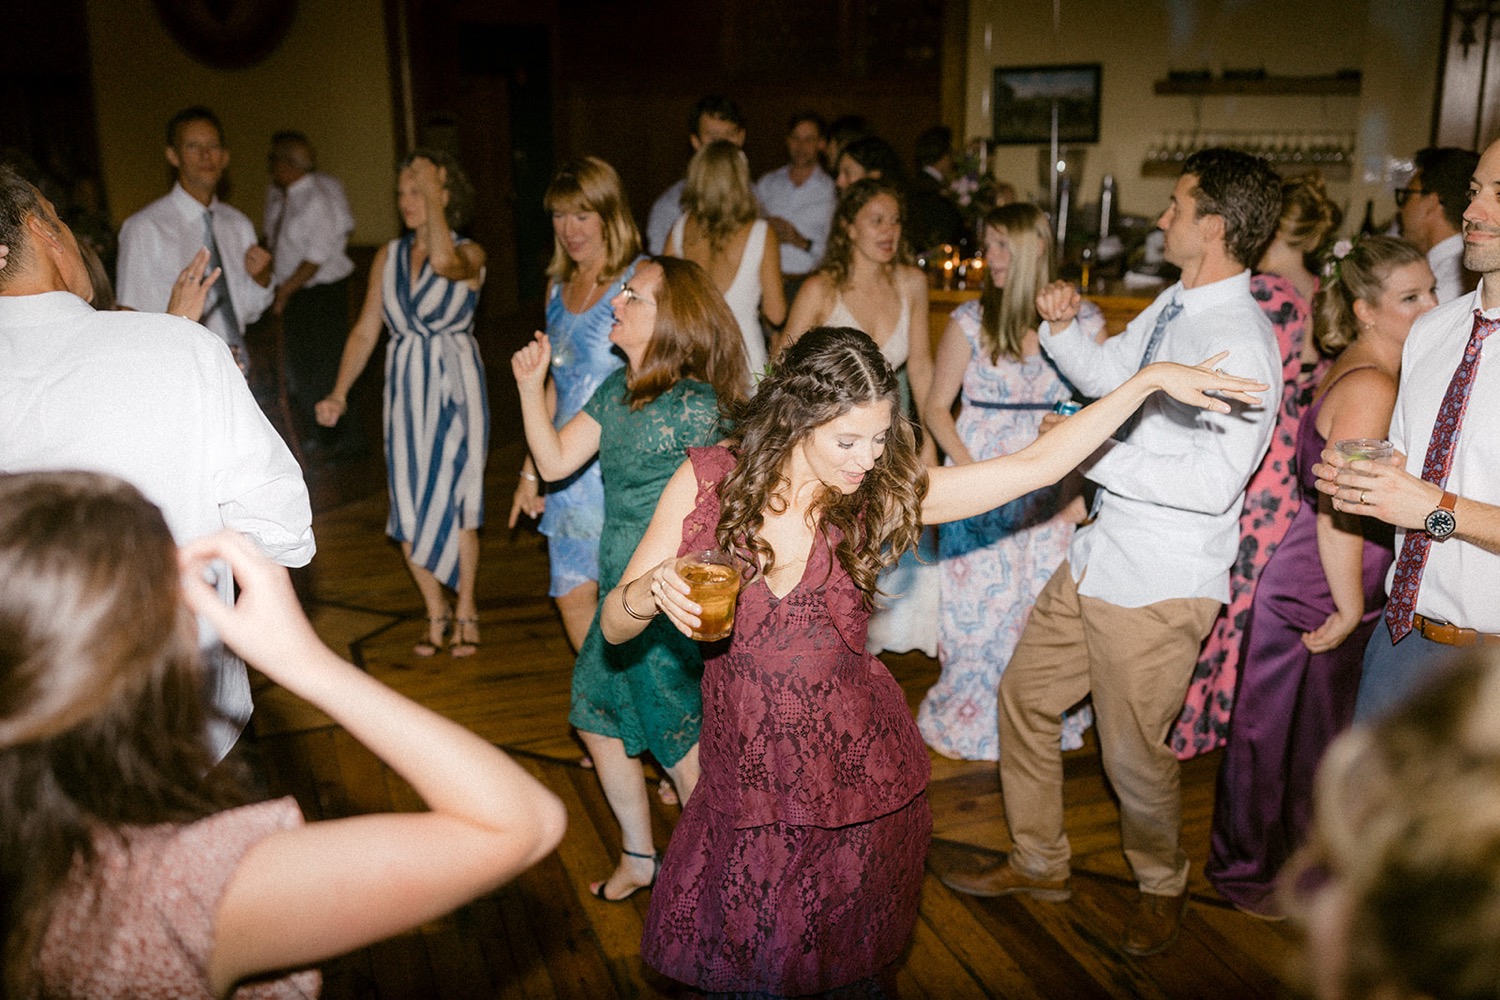 wedding reception guests dancing